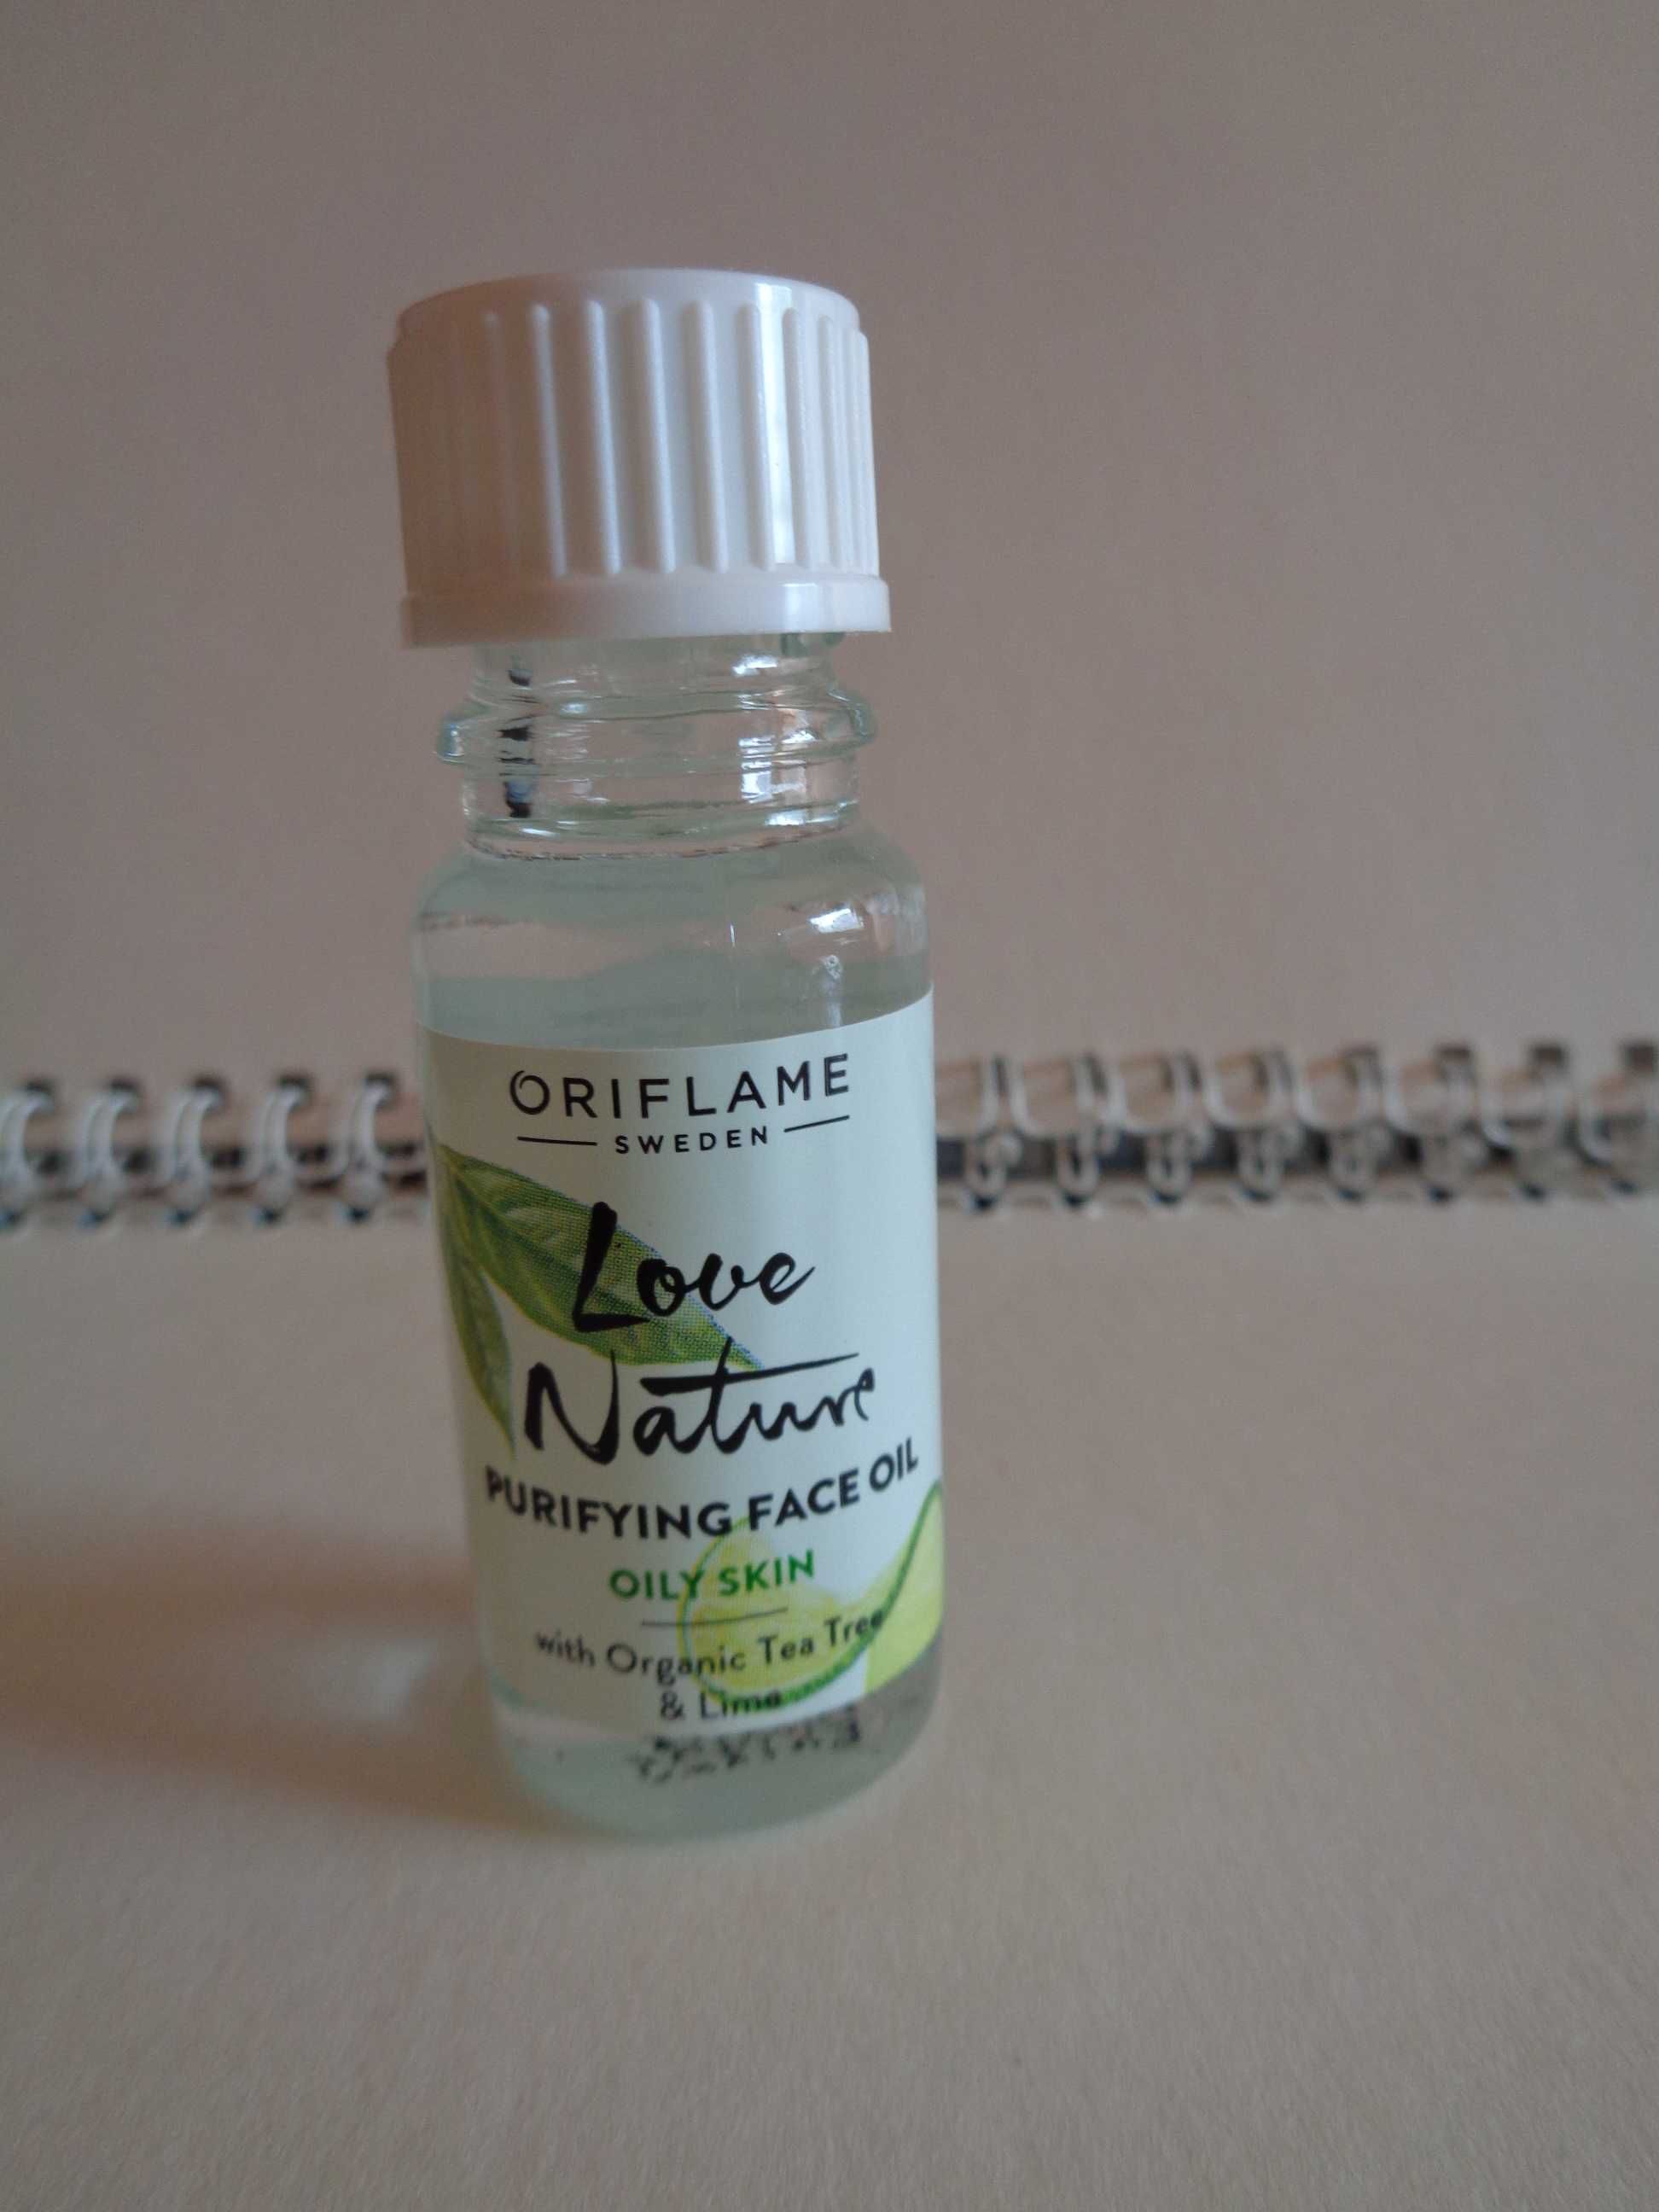 Bestseller Love Nature oczyszczający olejek cera tłusta 10 ml Oriflame